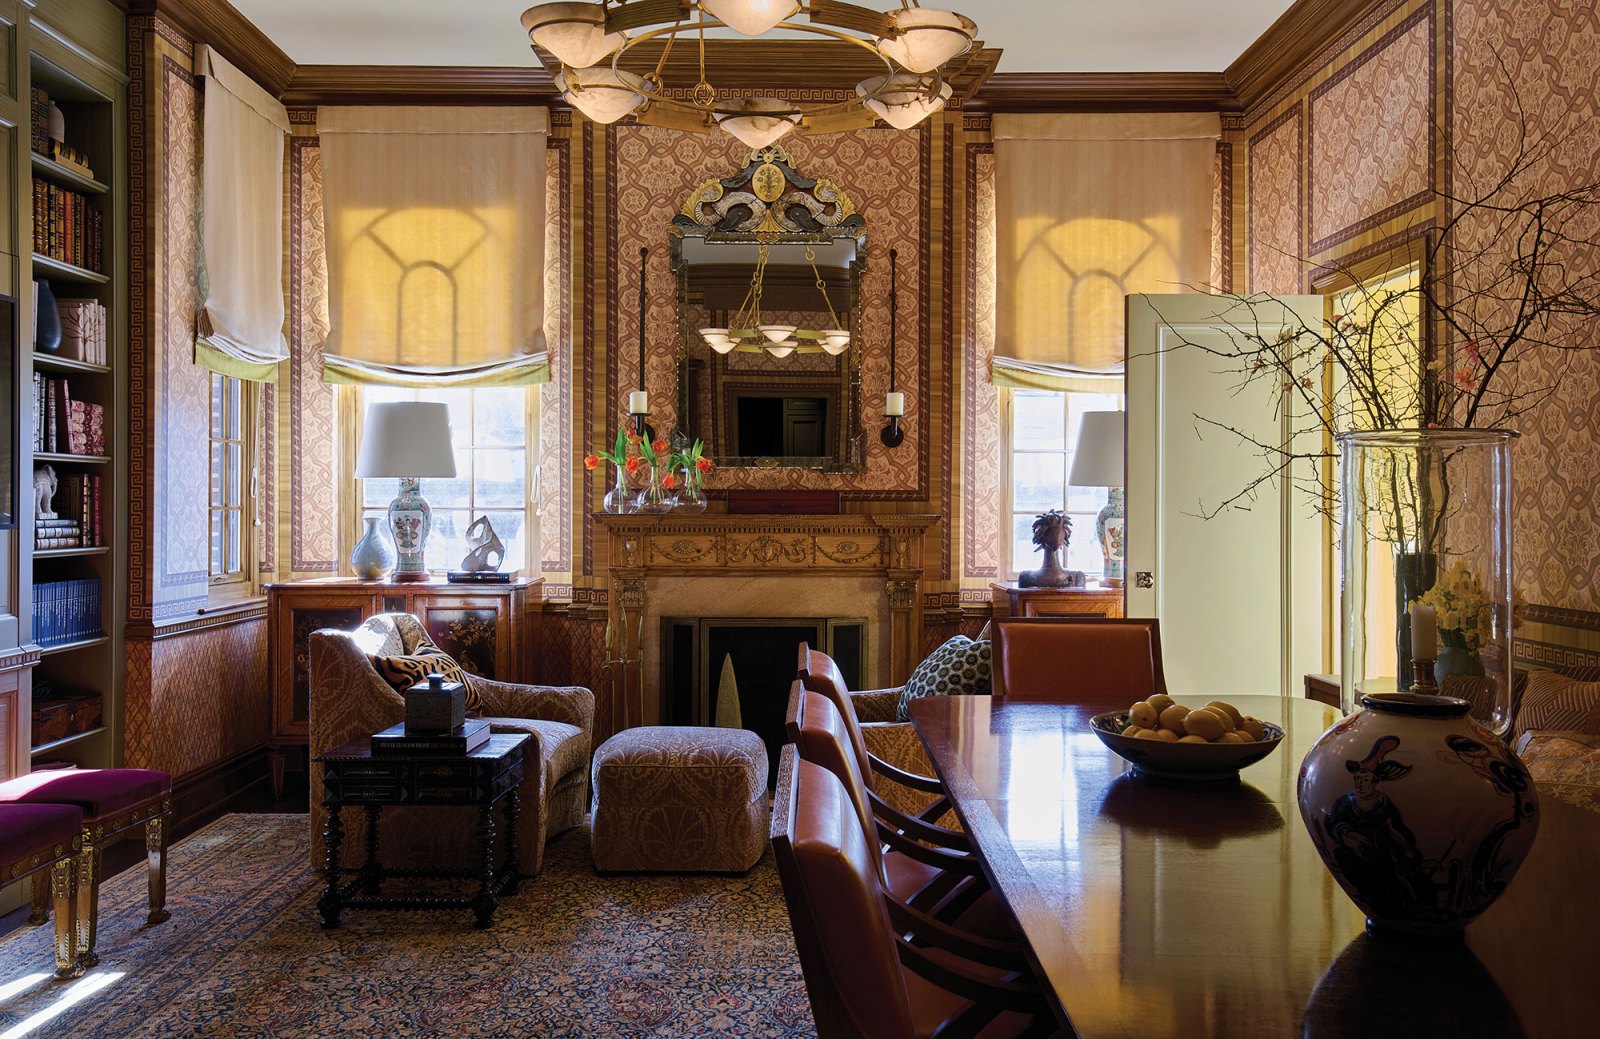 Shonda Rhimes New York City Apartment Is Inspired by Bridgerton